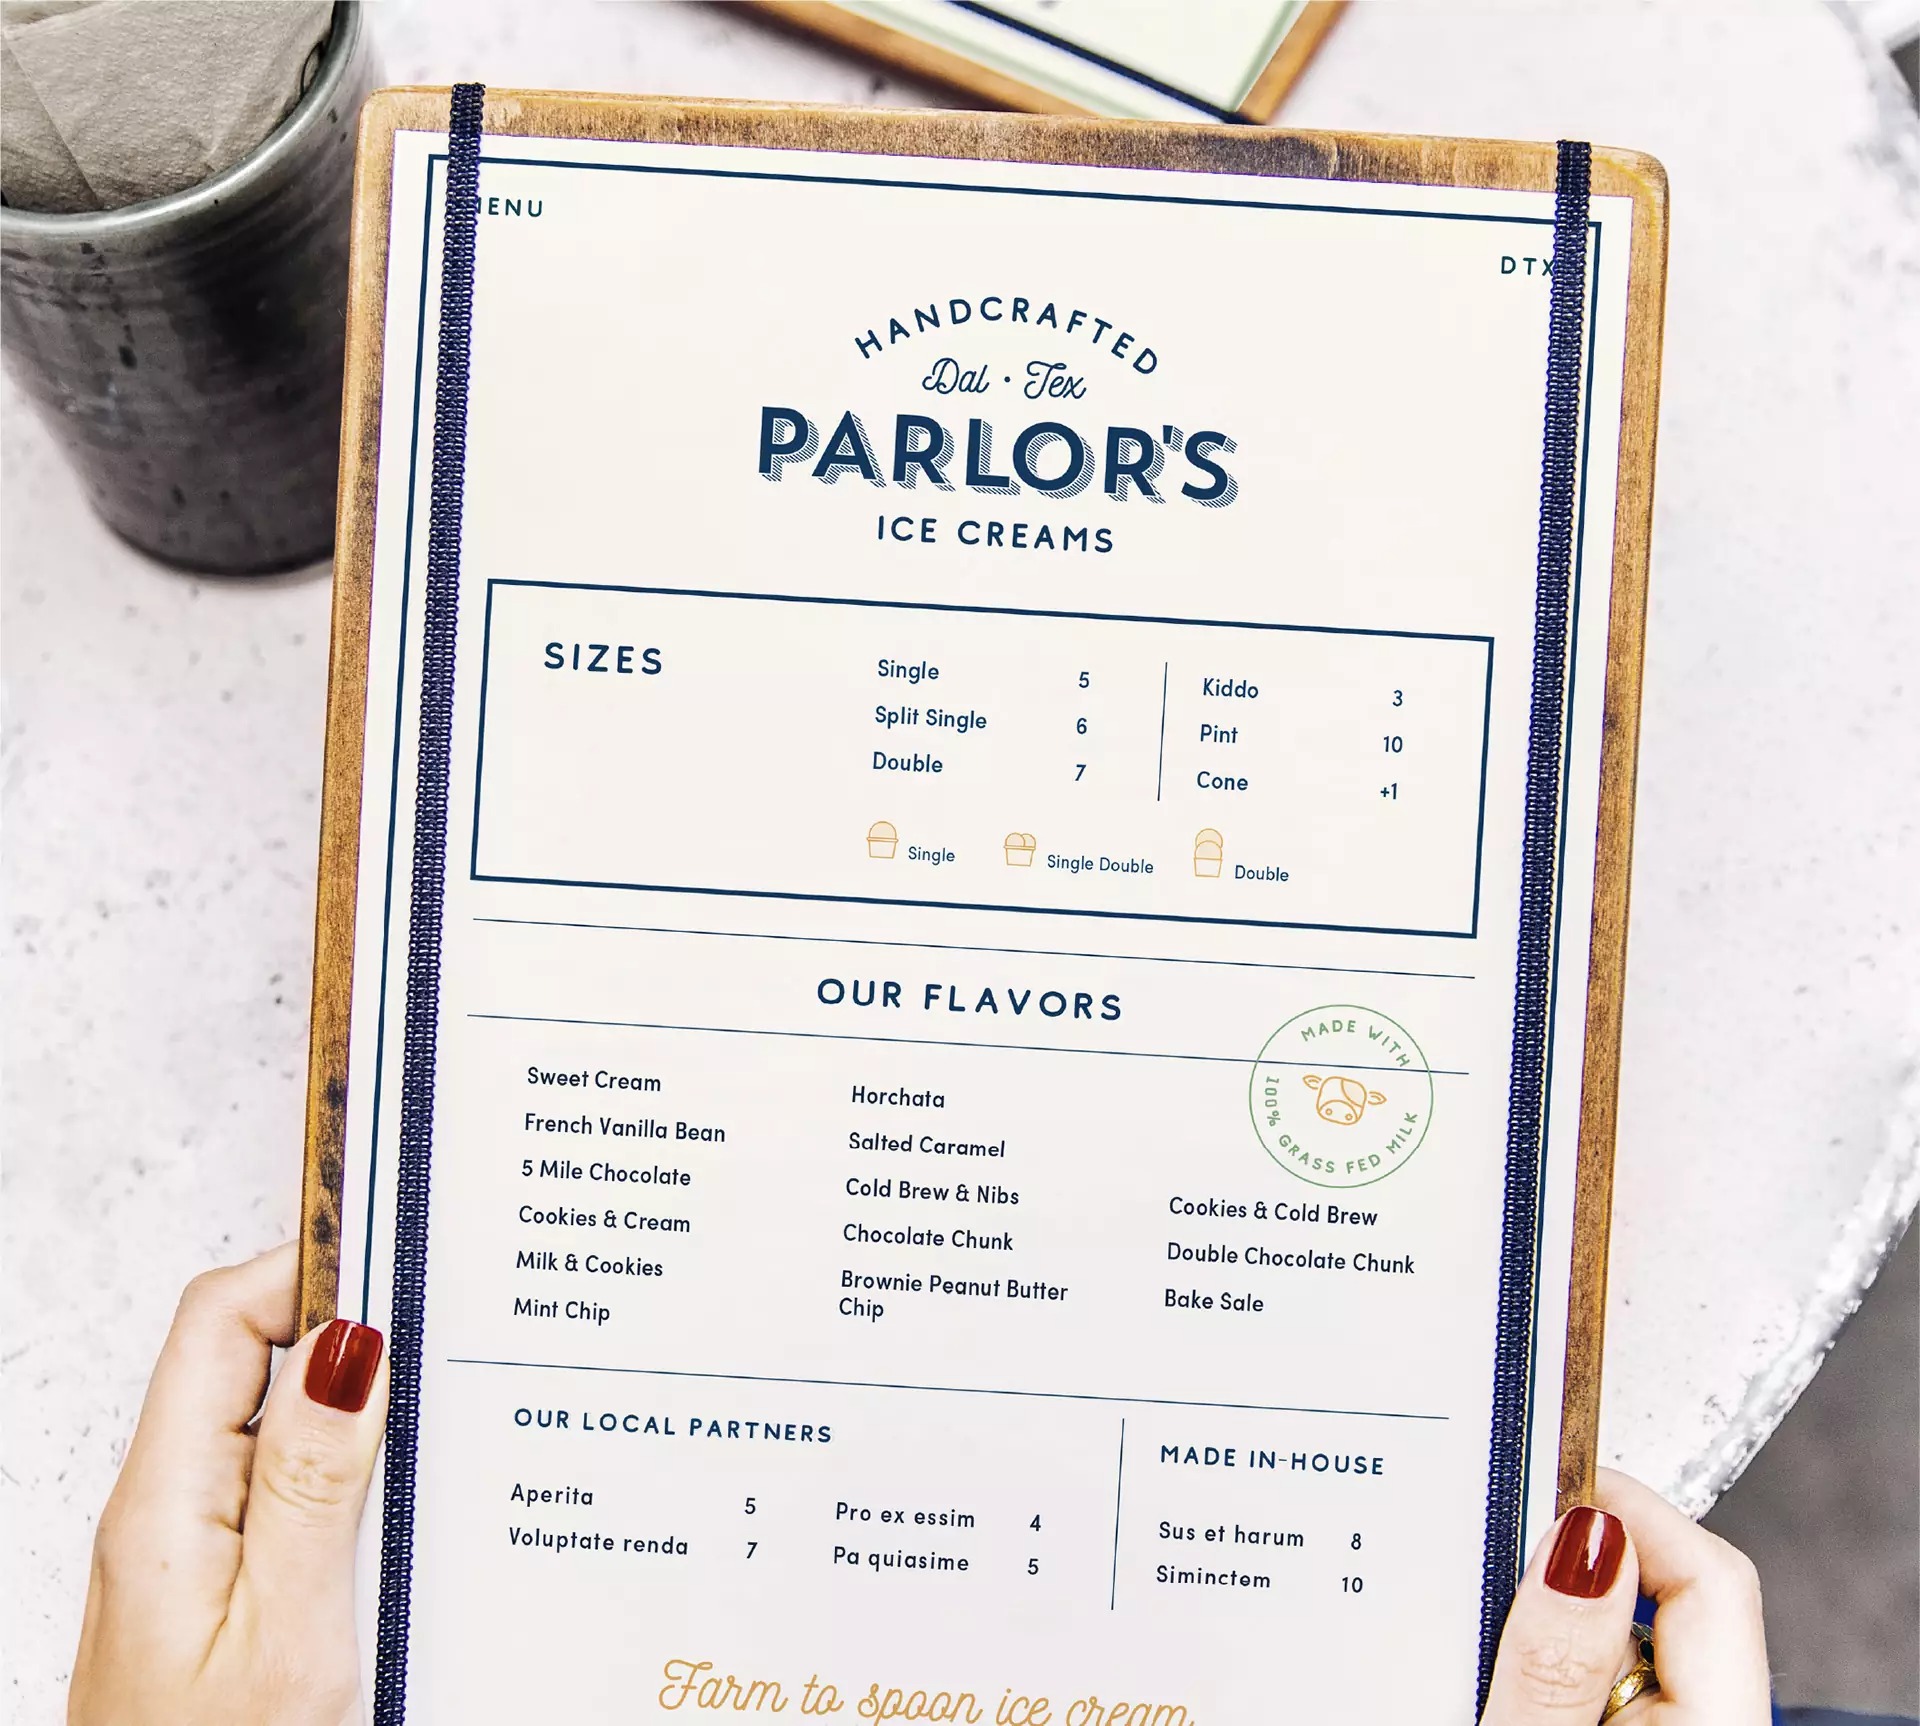 VI设计，欣赏Parlor’s Ice Creams冰淇淋品牌形象设计作品。